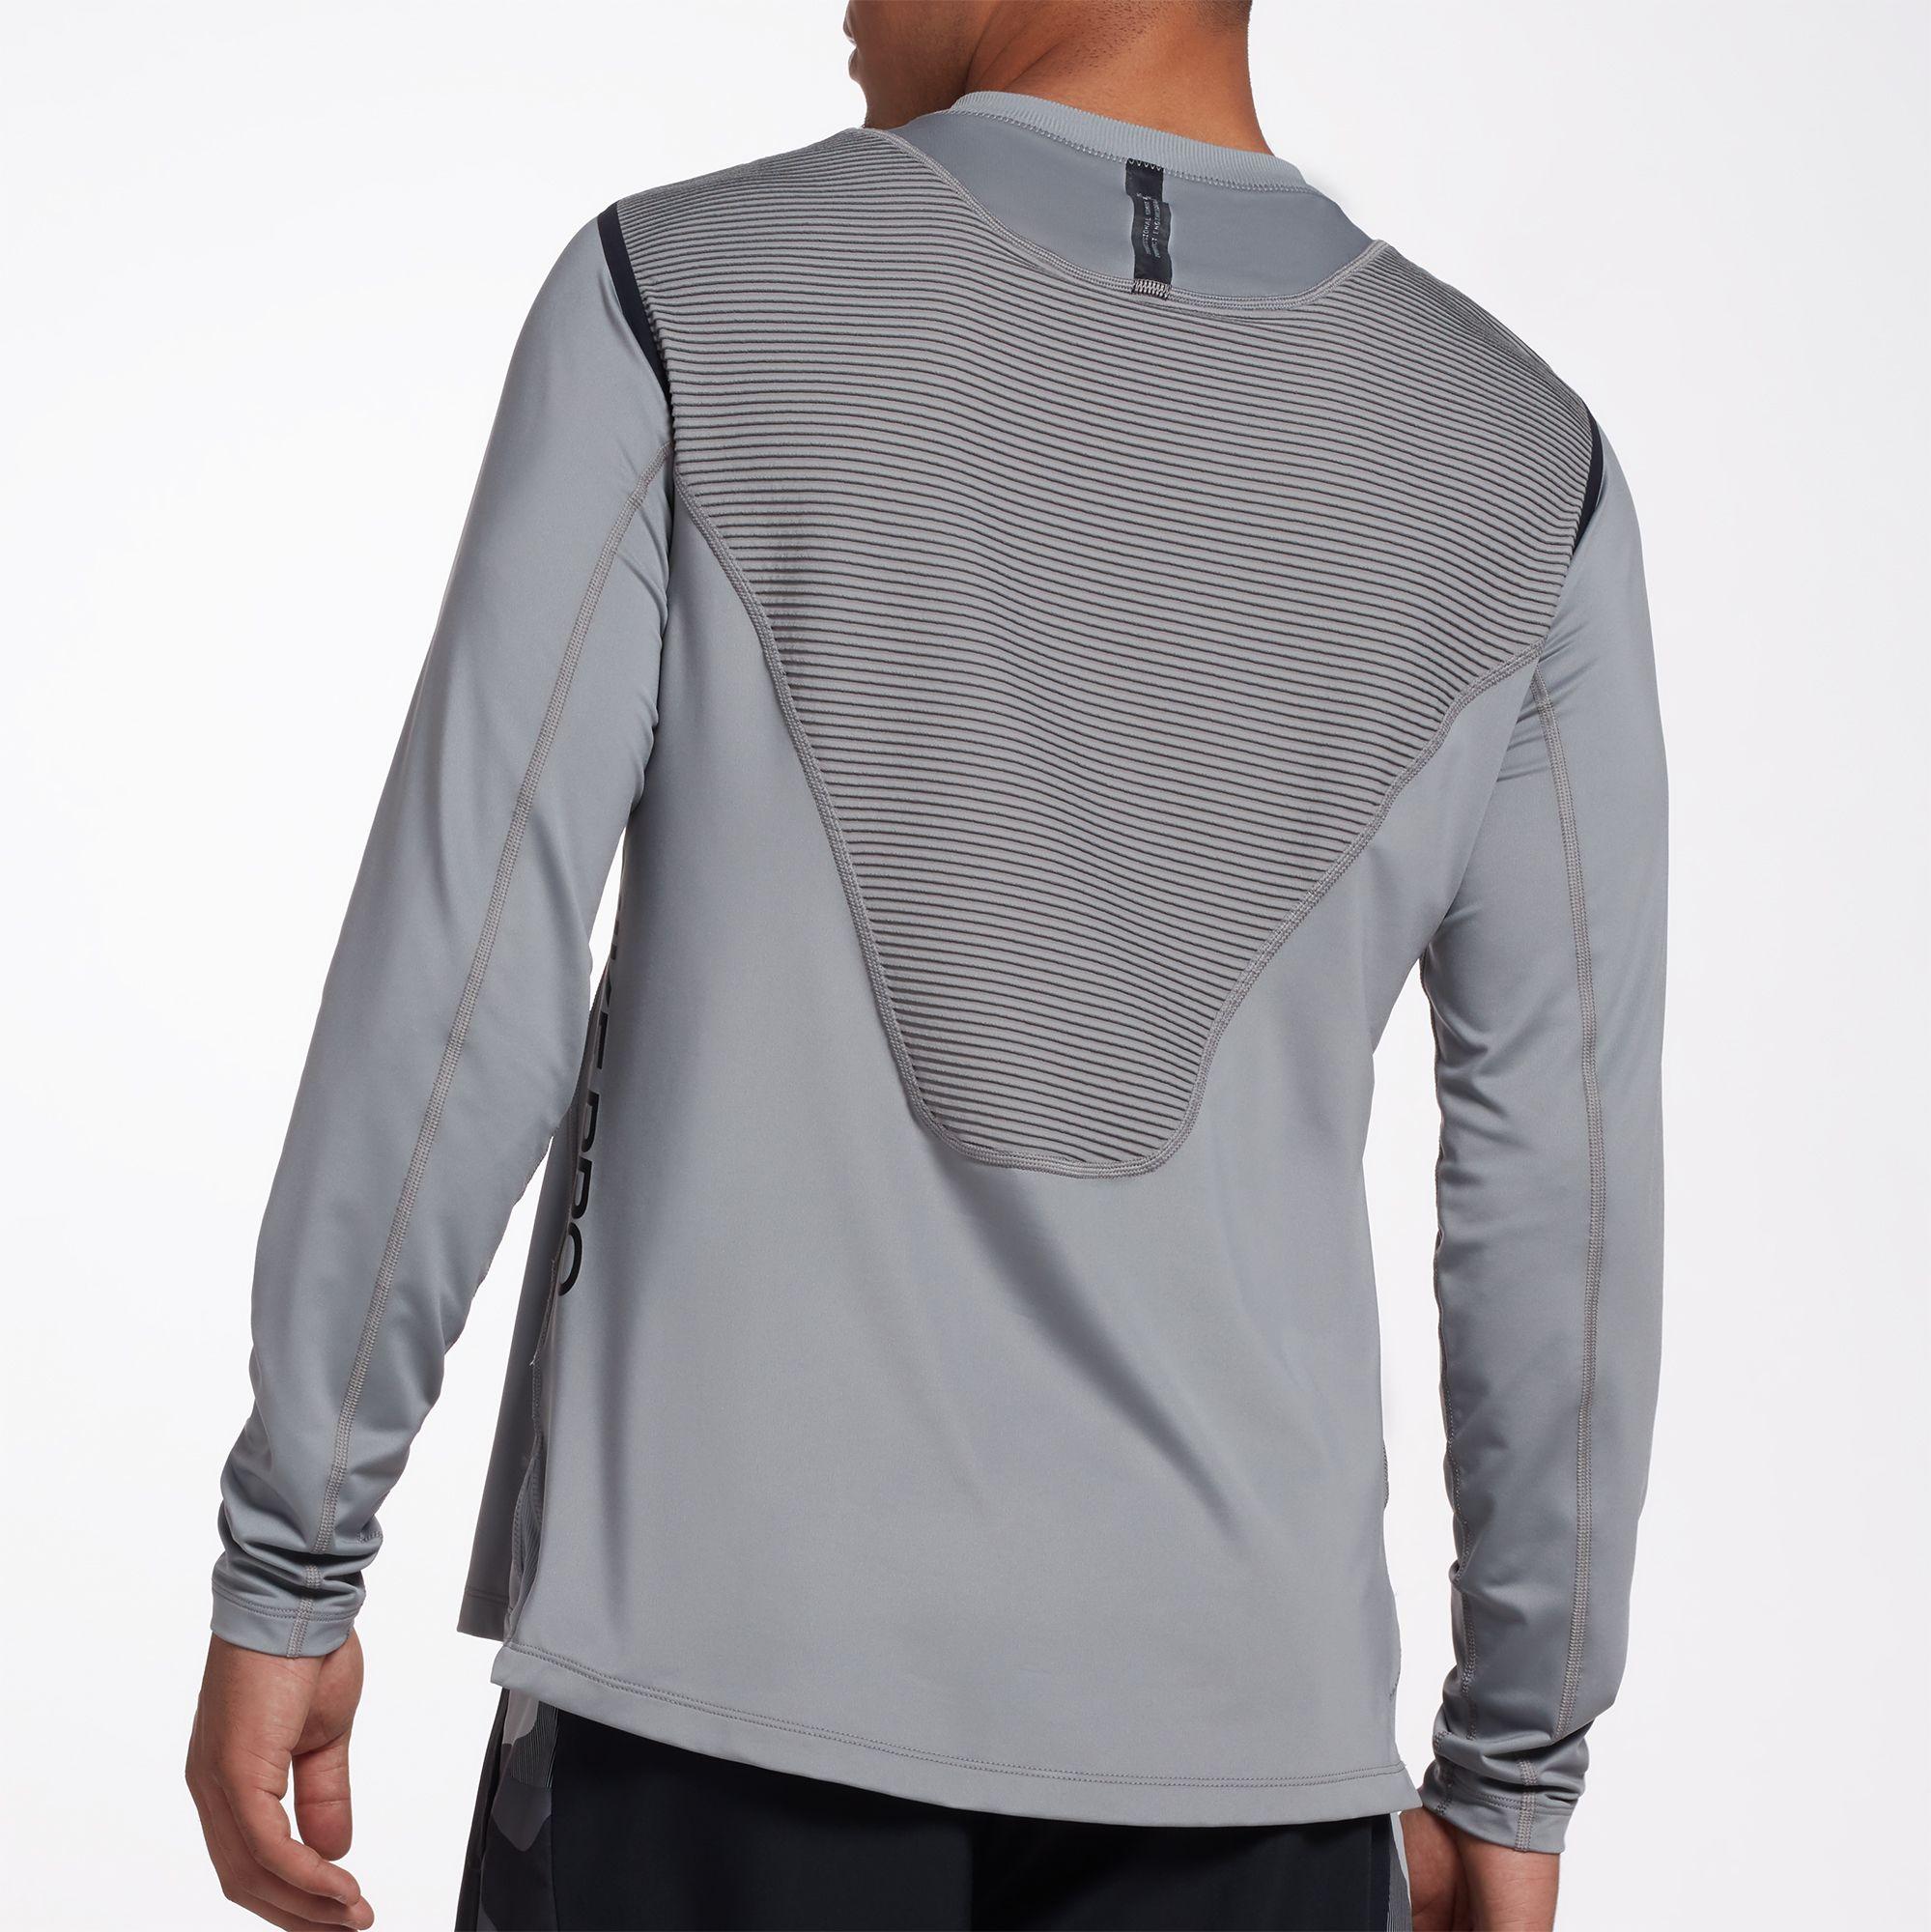 Nike Synthetic Pro Aeroadapt Long Sleeve Shirt in Gray for Men - Lyst